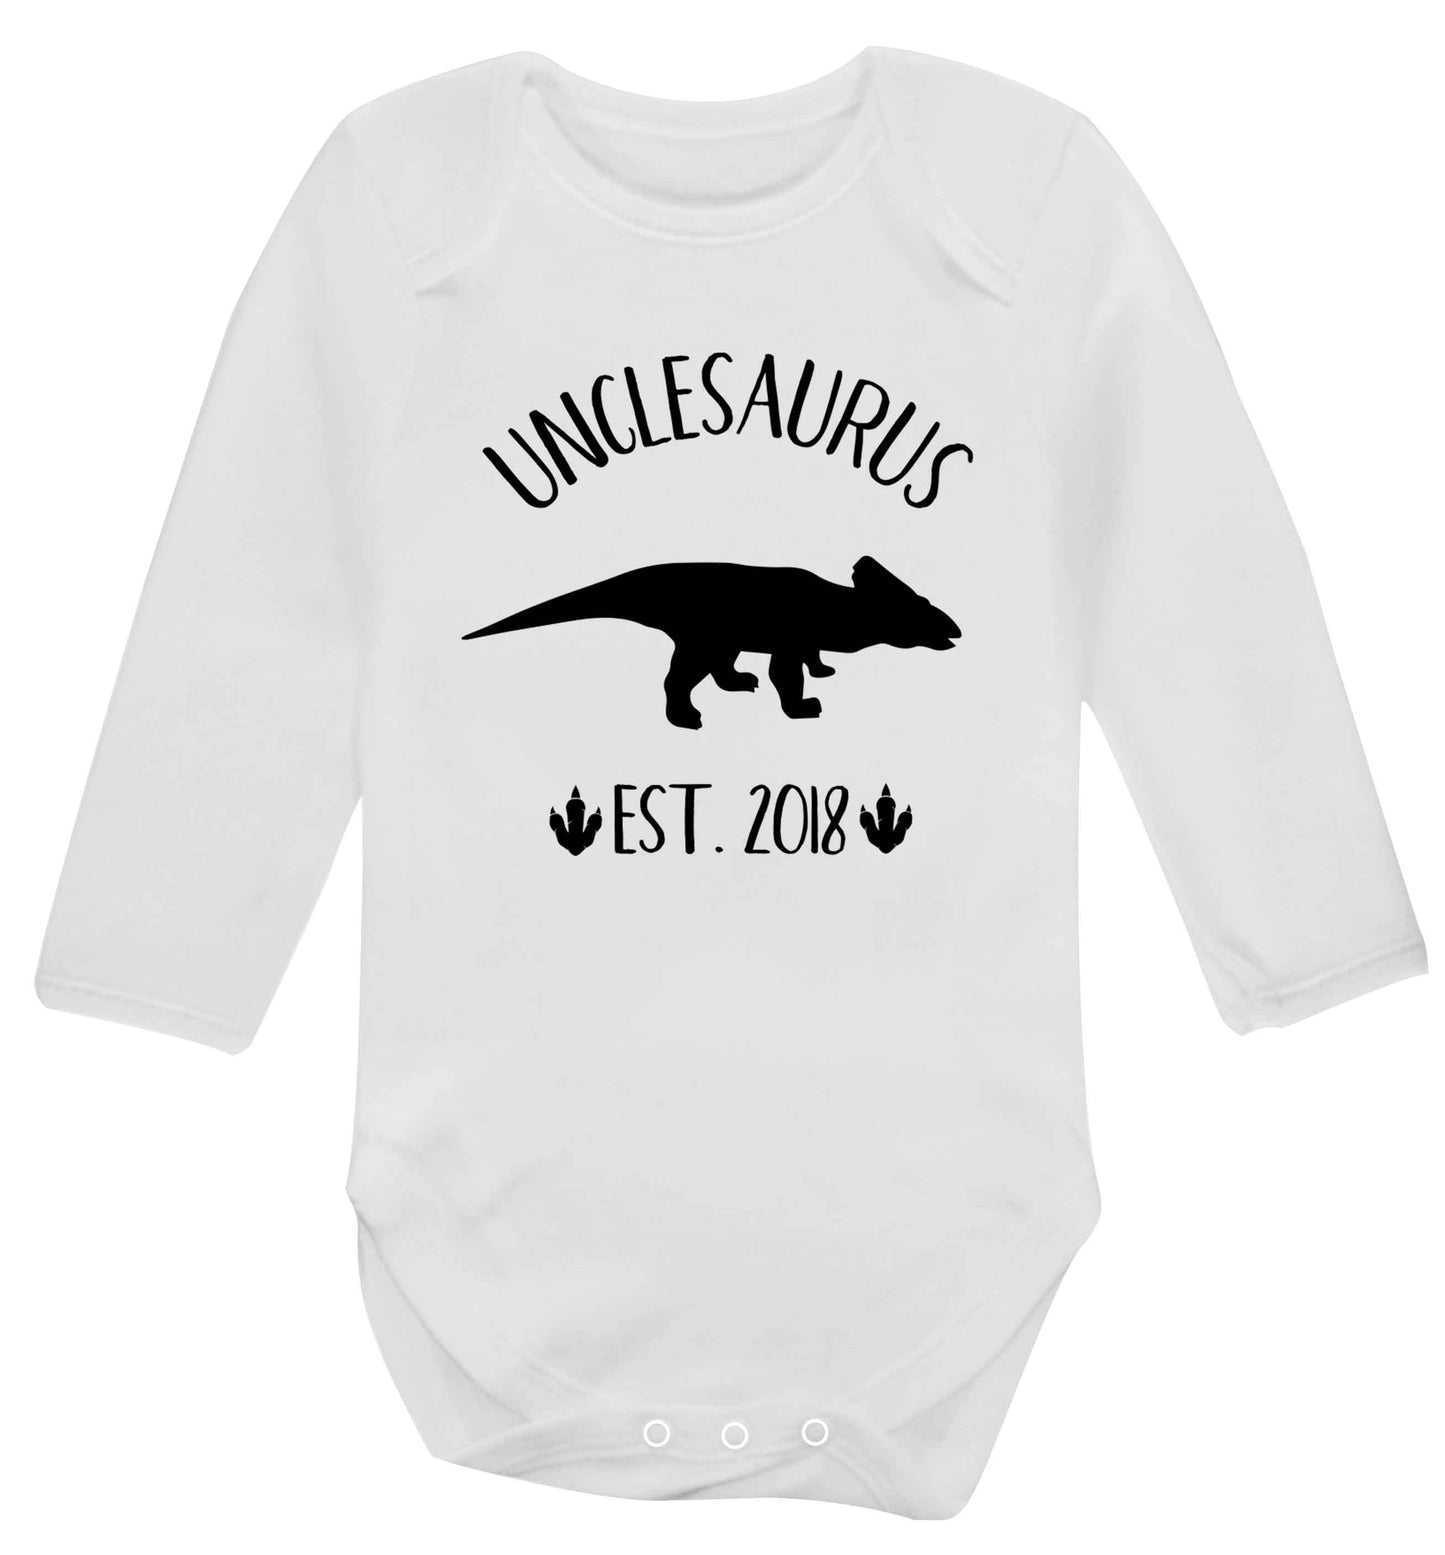 Personalised unclesaurus since (custom date) Baby Vest long sleeved white 6-12 months